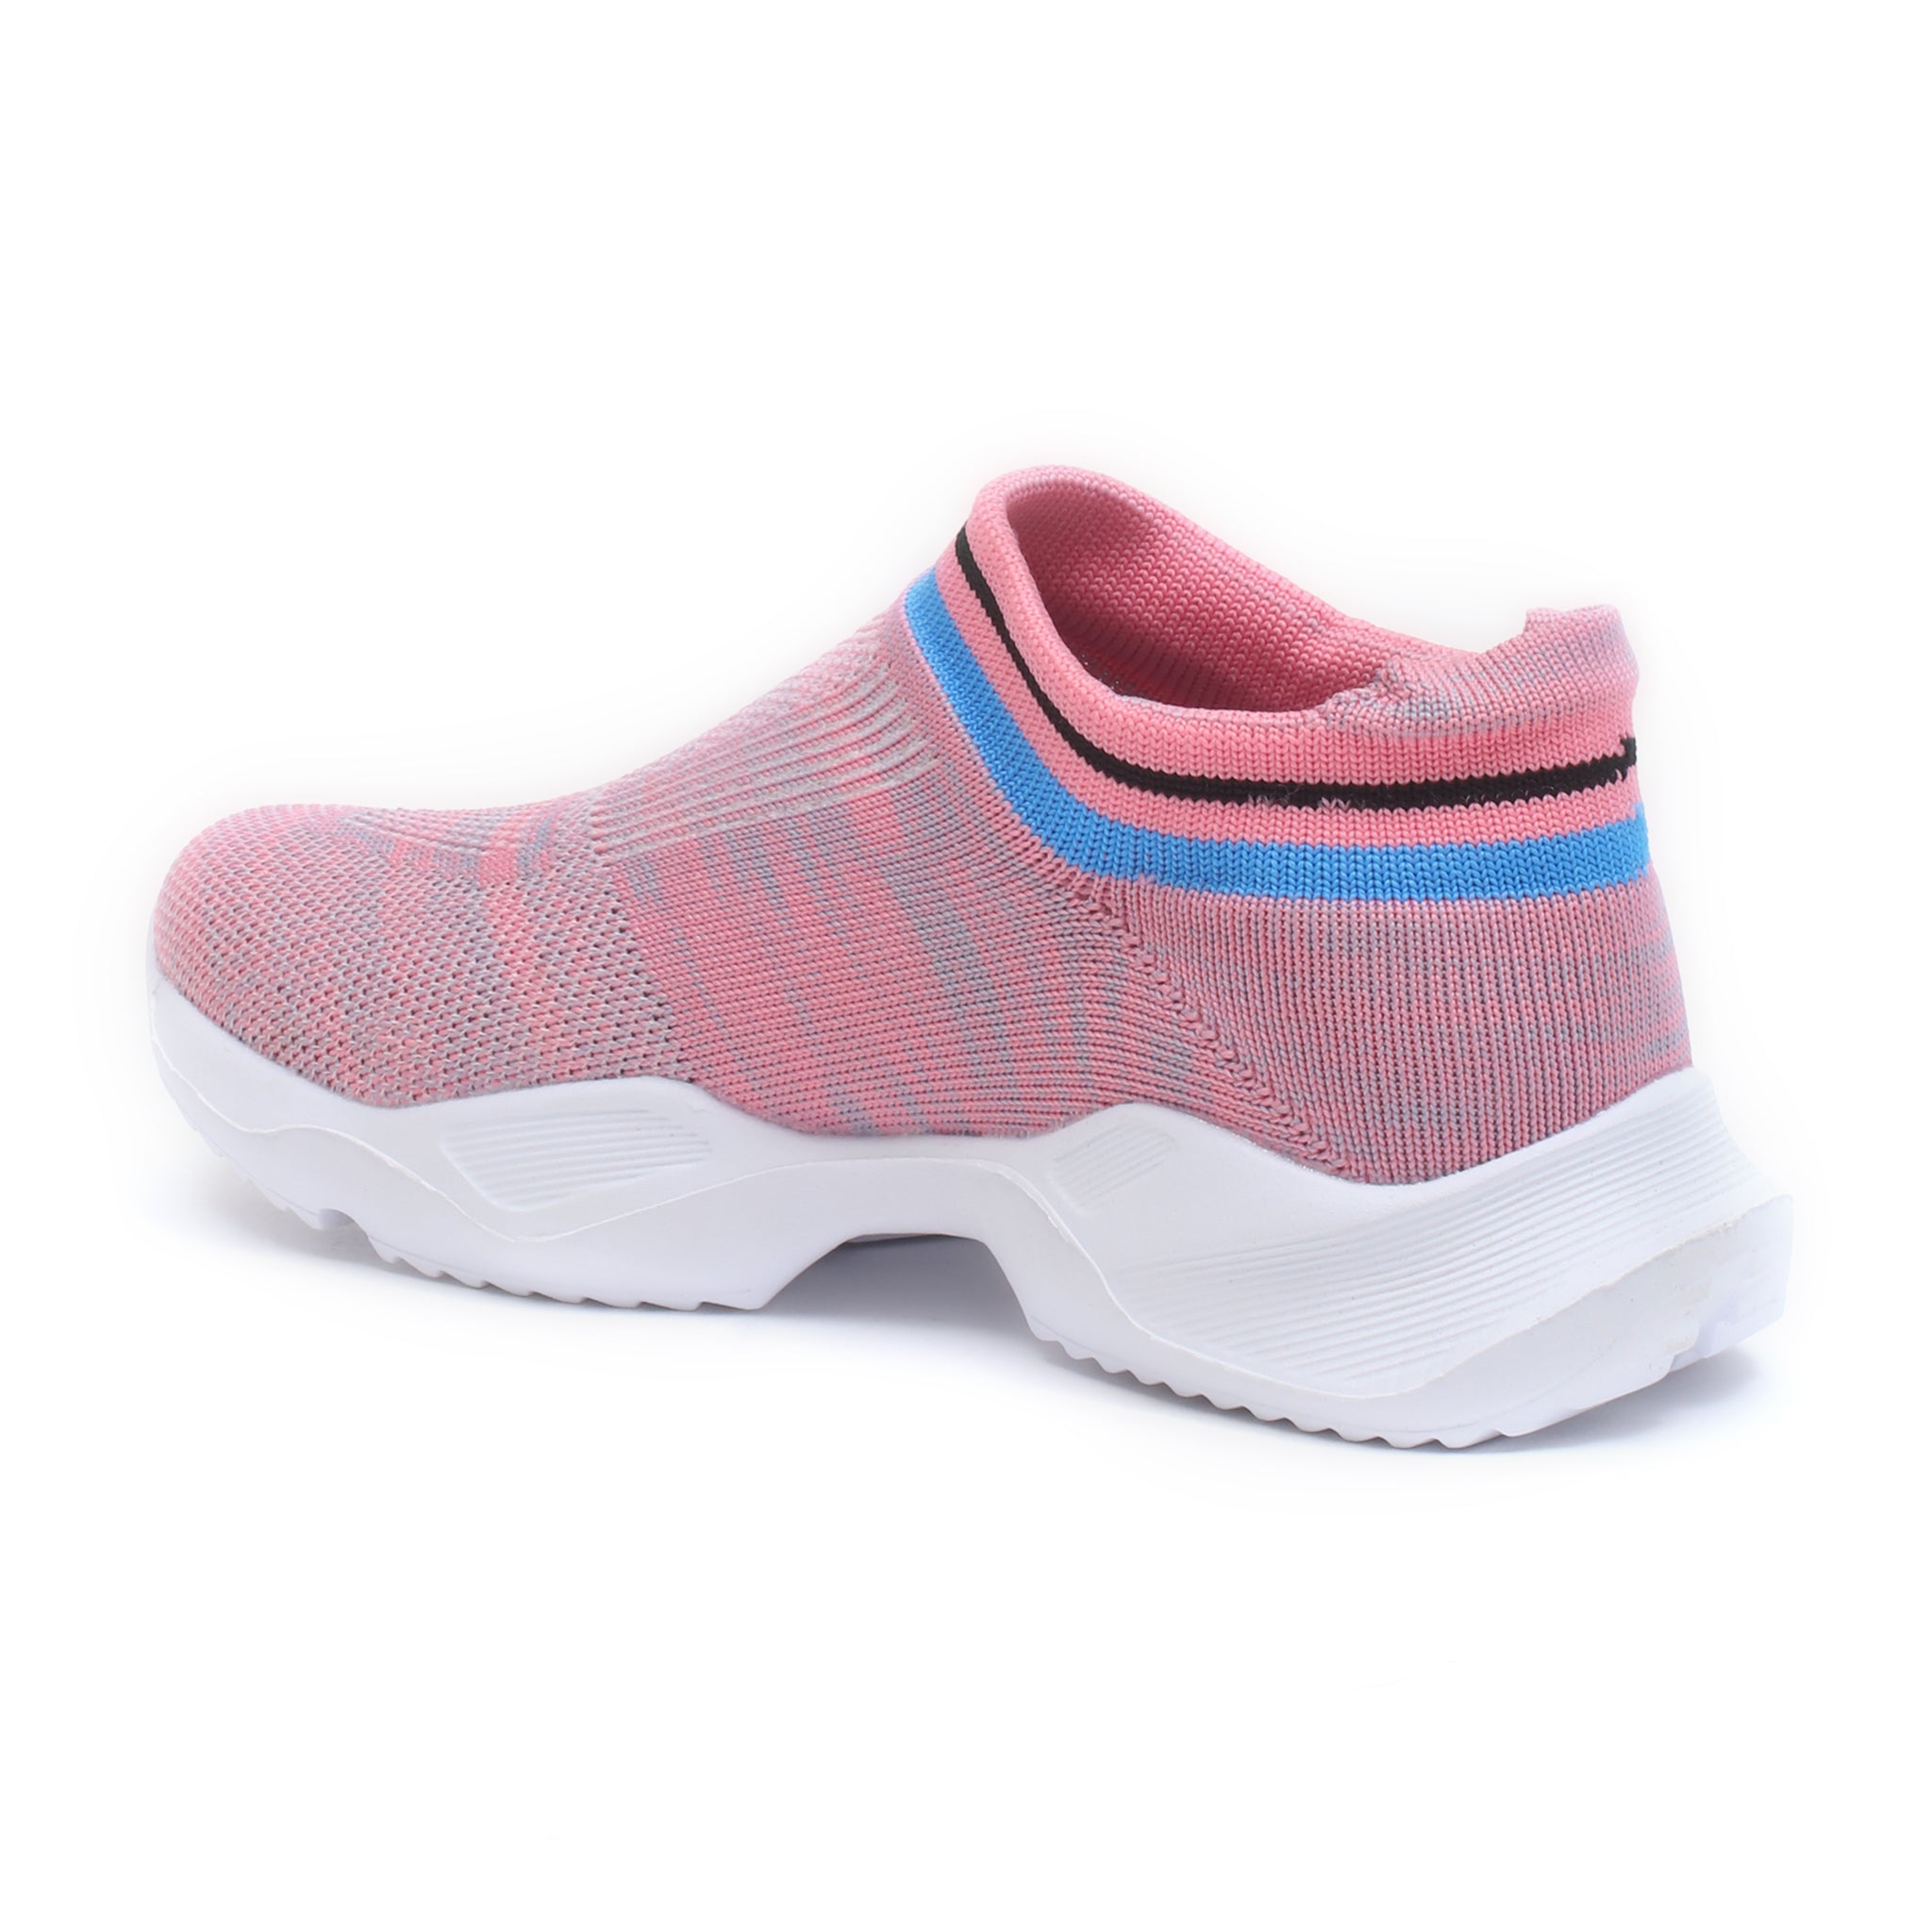 Impakto Kids Pink Casual Shoes